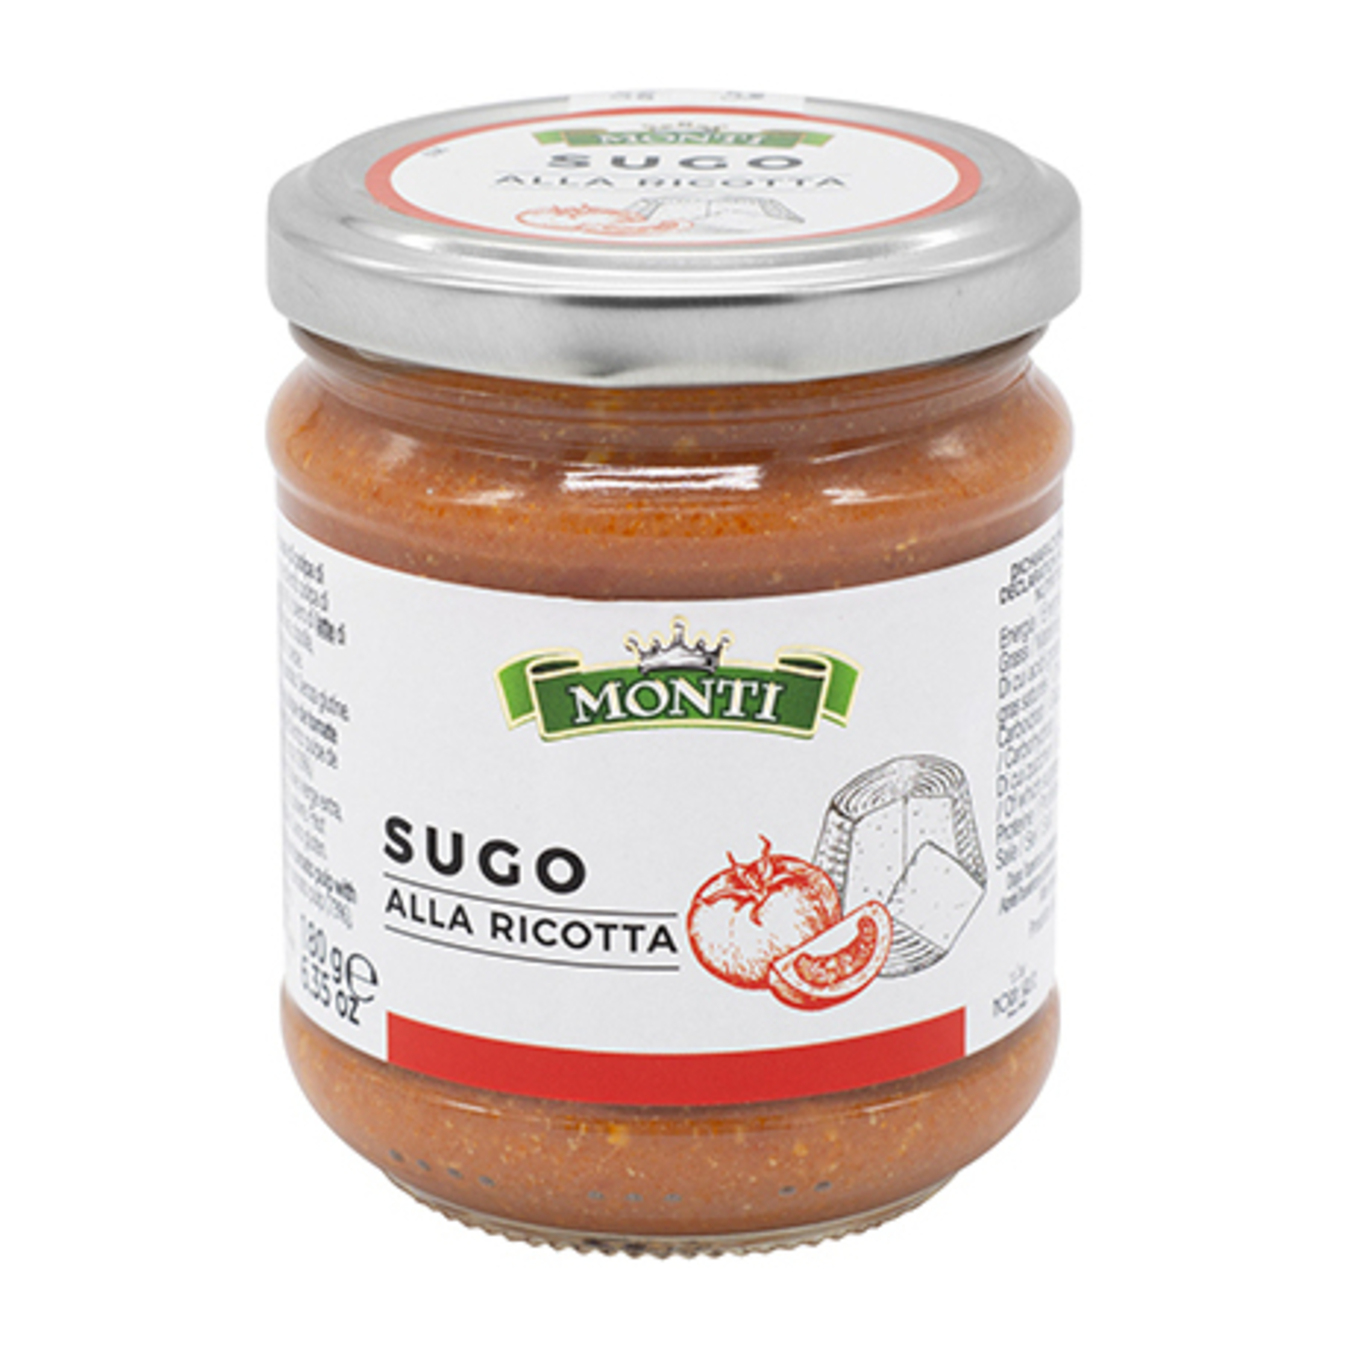 Monti tomato sauce with ricotta 180g